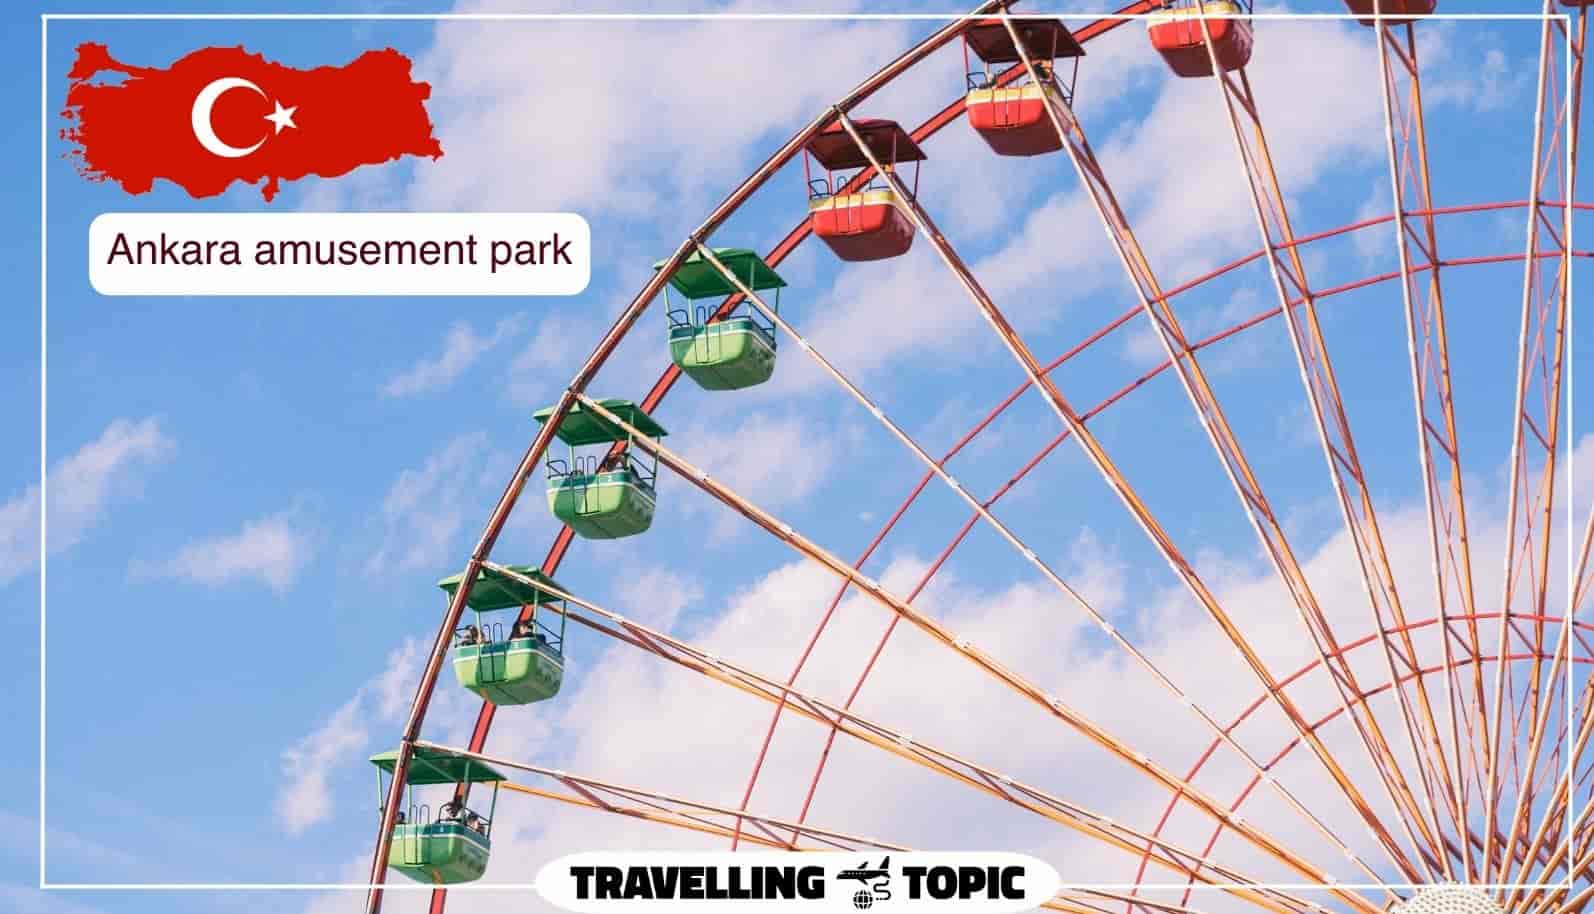 Ankara amusement park